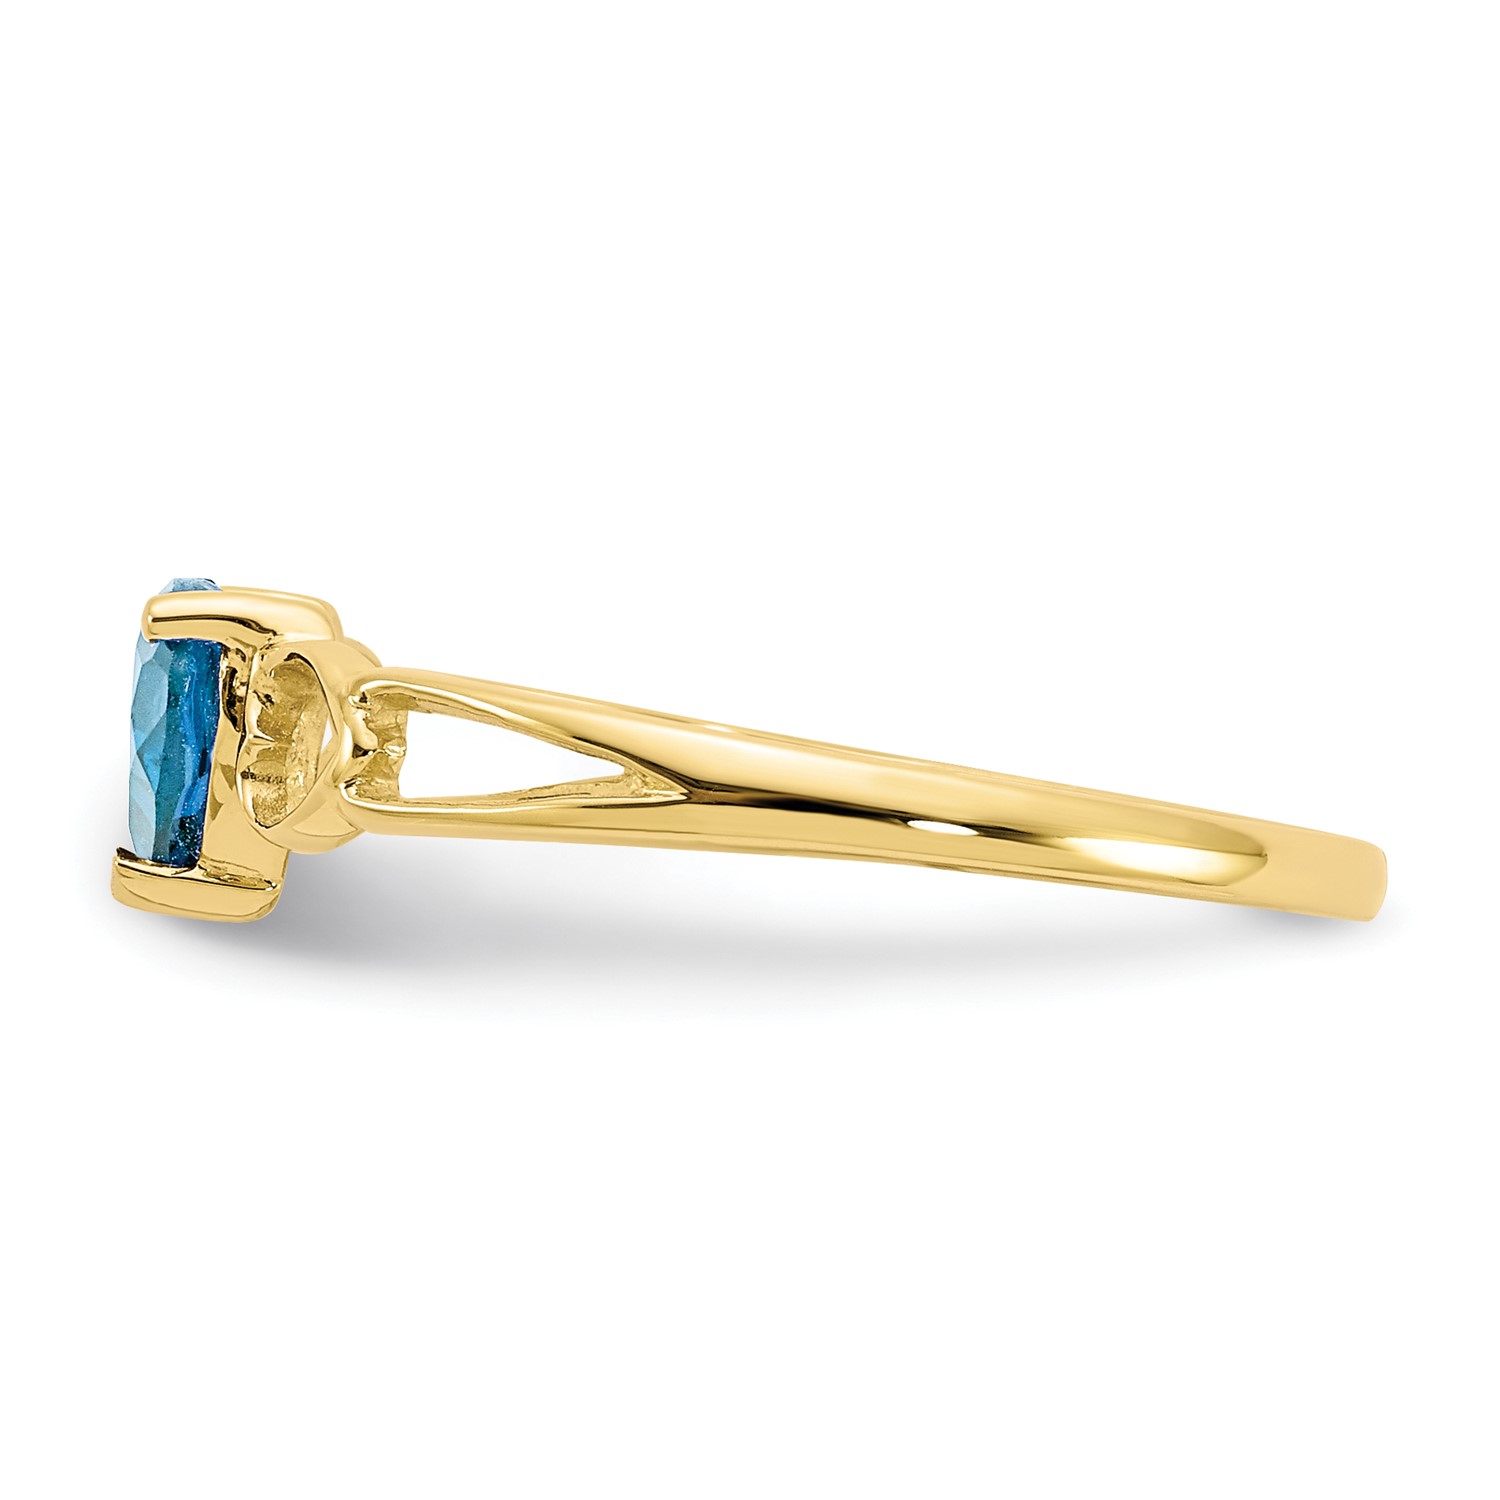 10k Yellow Gold Polished Geniune Heart Blue Topaz Birthstone Ring Ebay